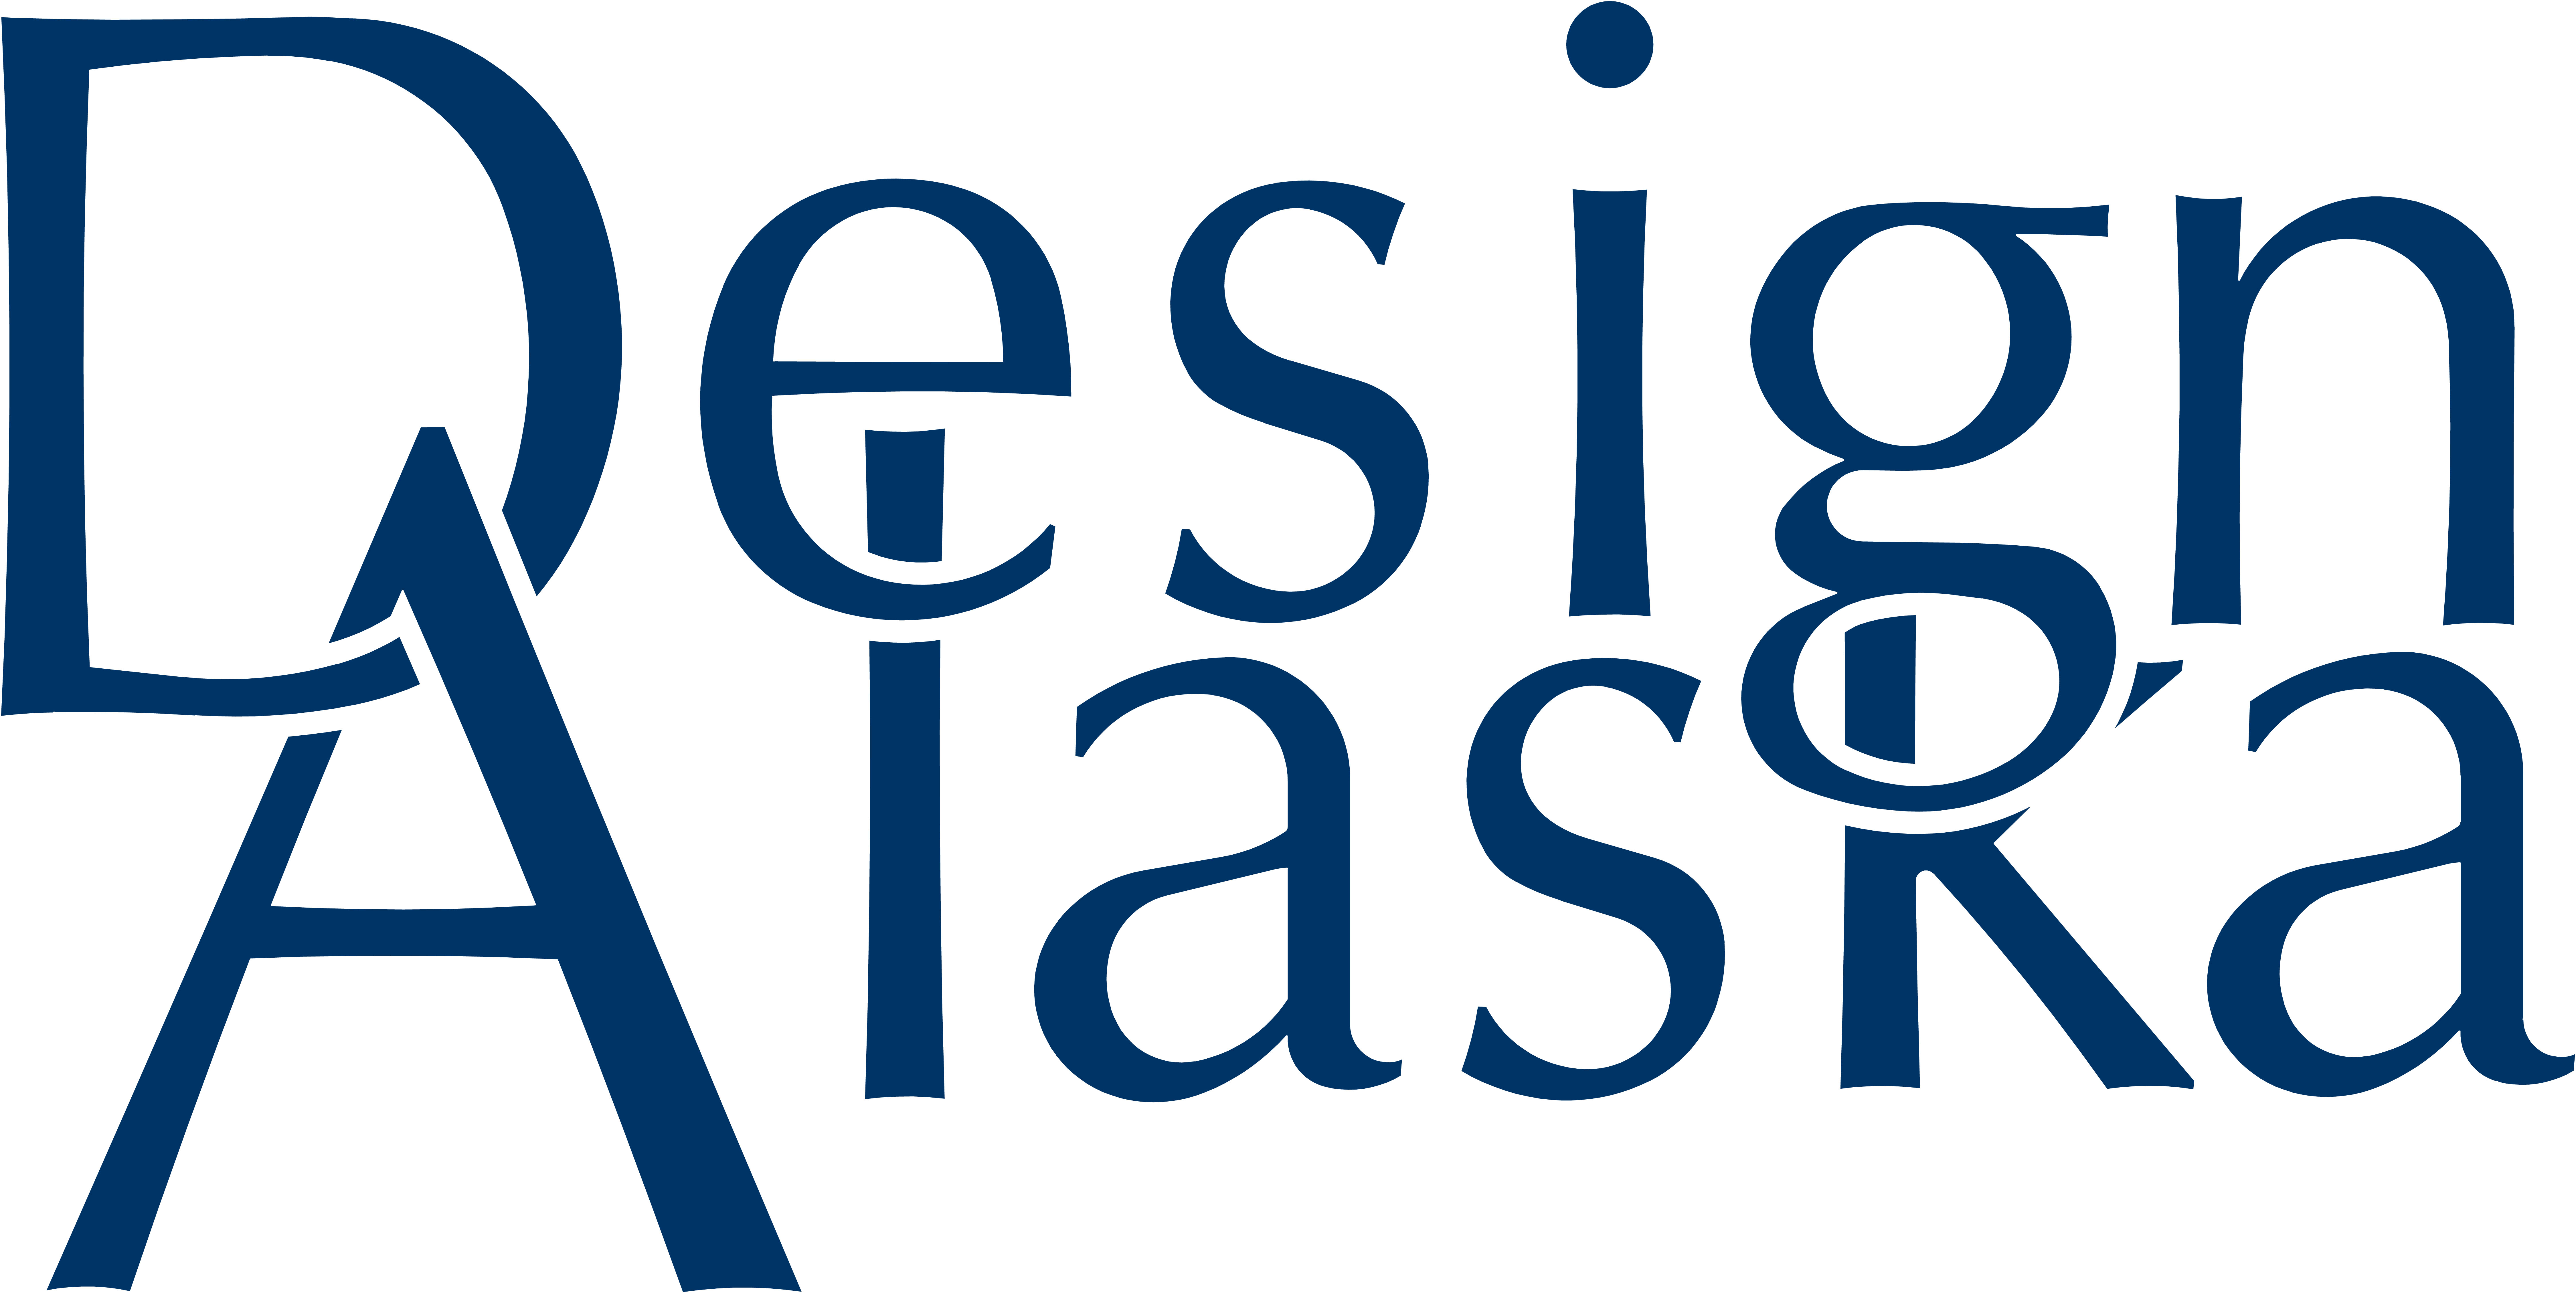 Design Alaska logo-2.png